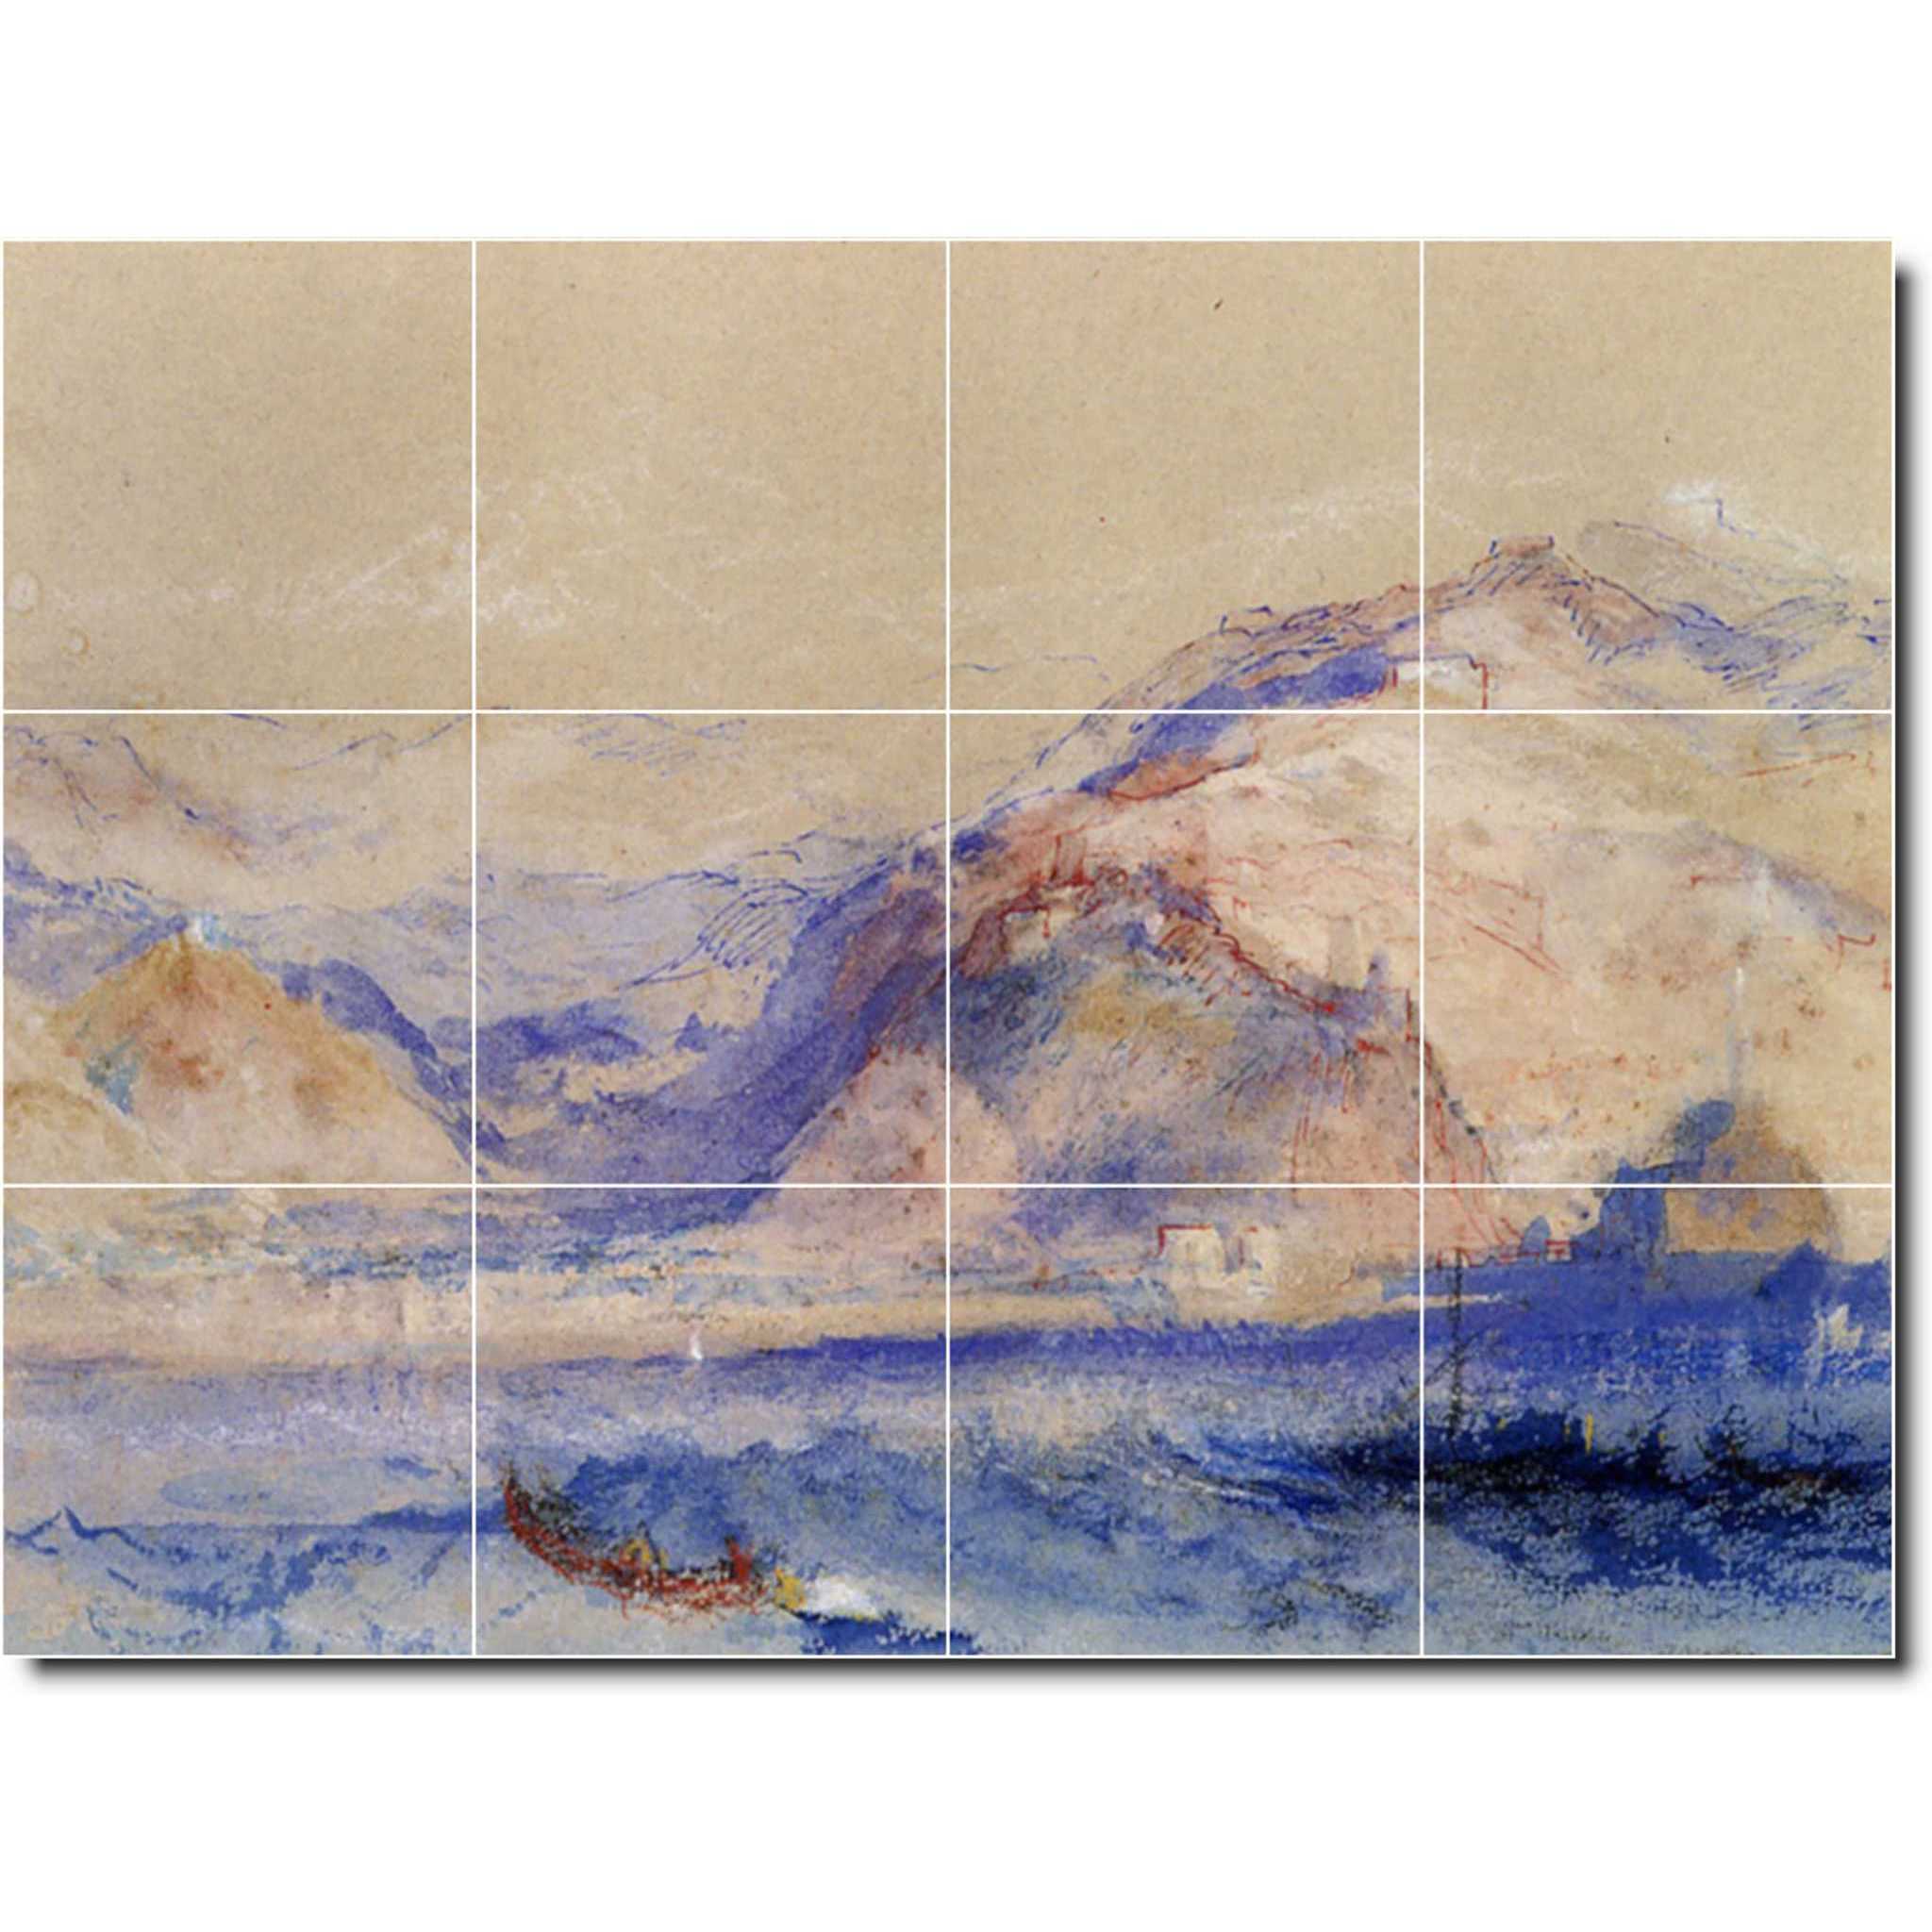 joseph turner landscape painting ceramic tile mural p08847